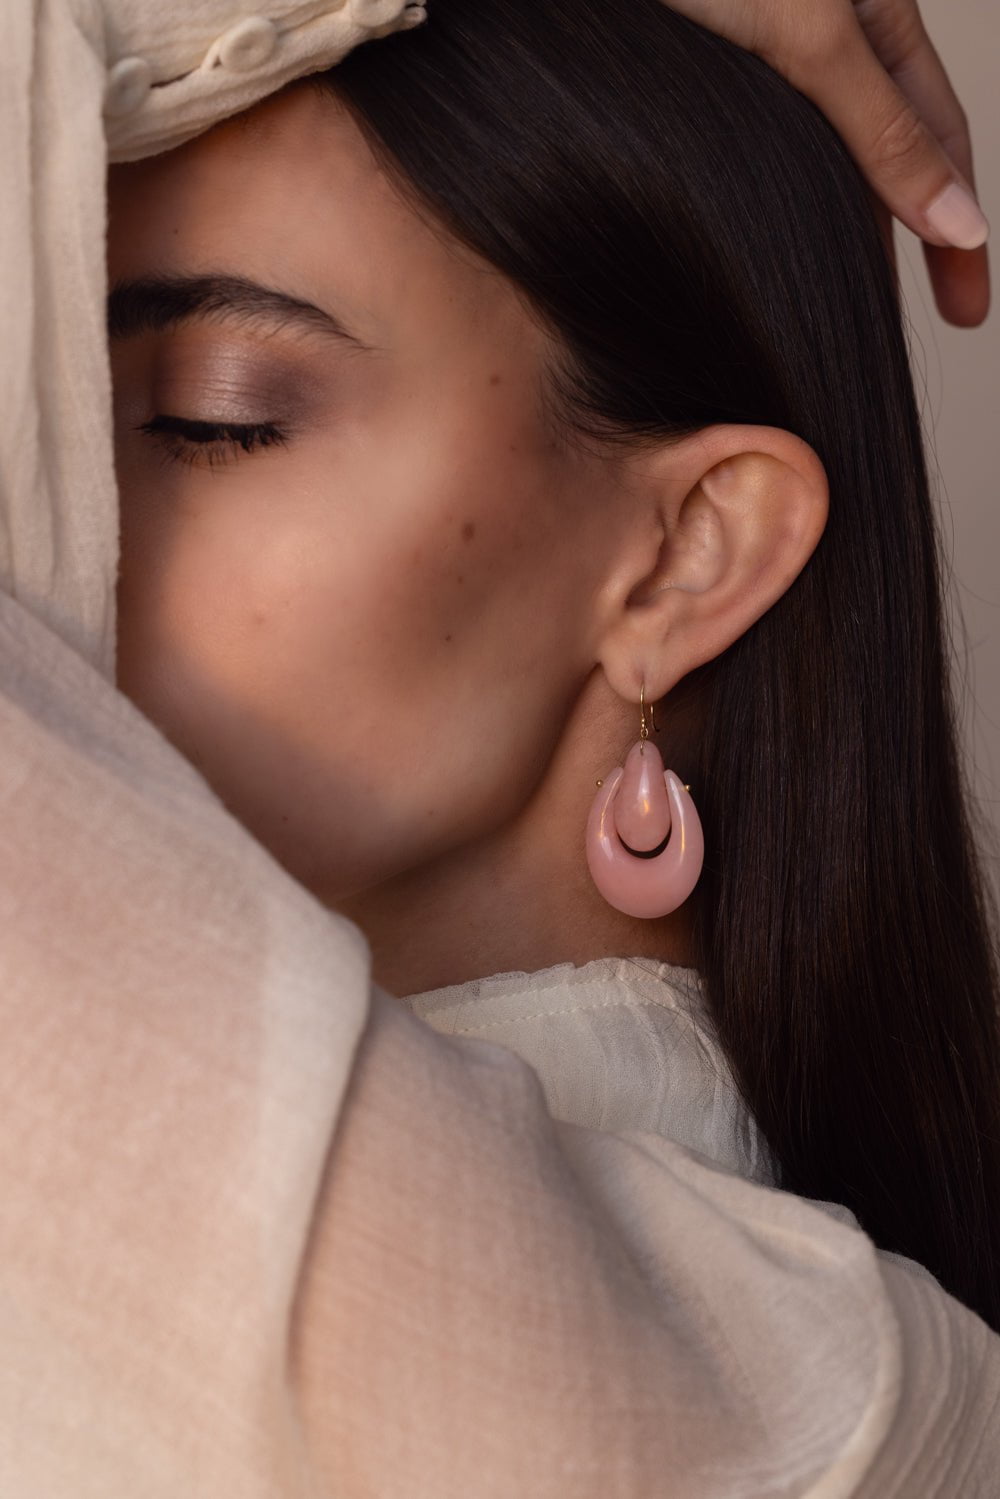 Large O'Keeffe Pink Opal Earrings JEWELRYFINE JEWELEARRING TEN THOUSAND THINGS   